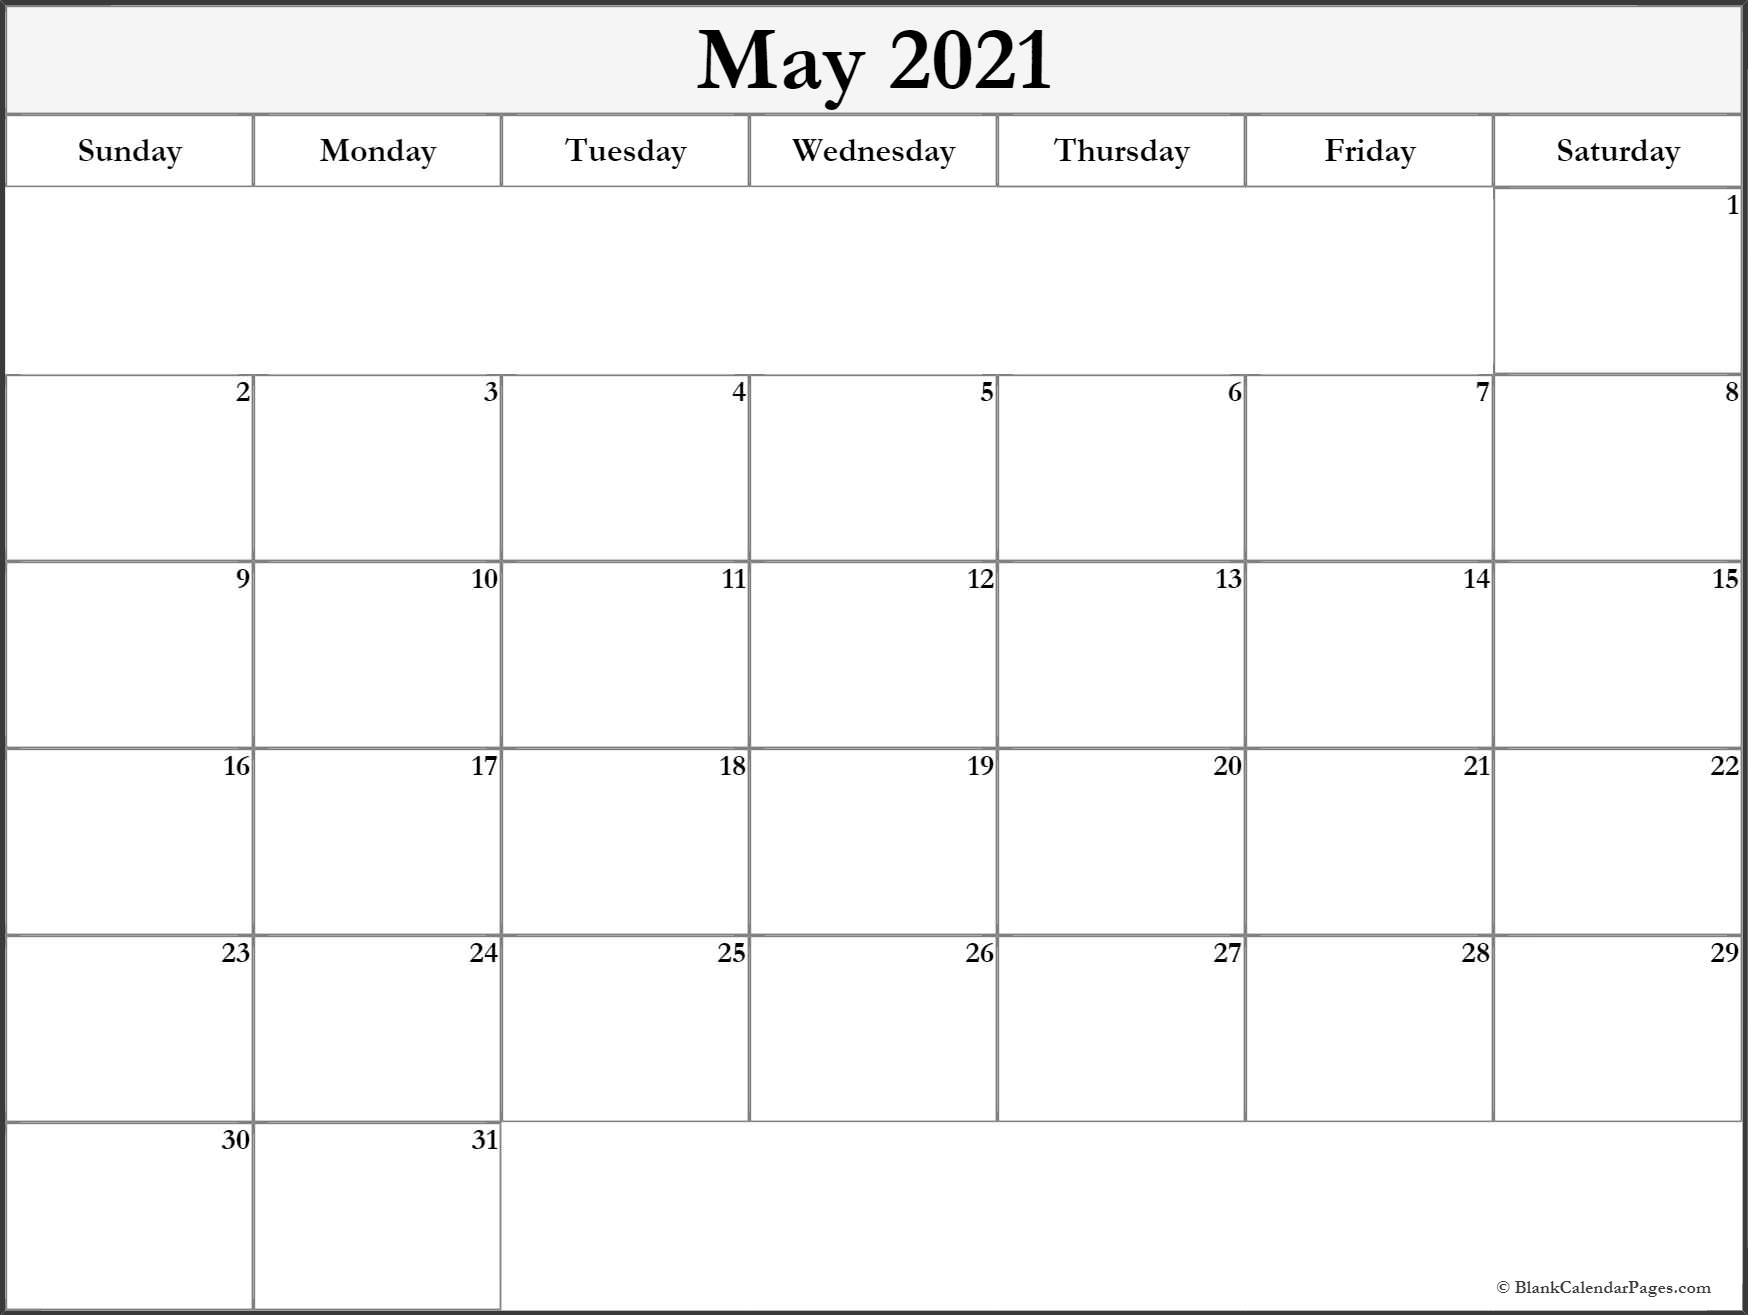 May 2021 Blank Calendar Templates.